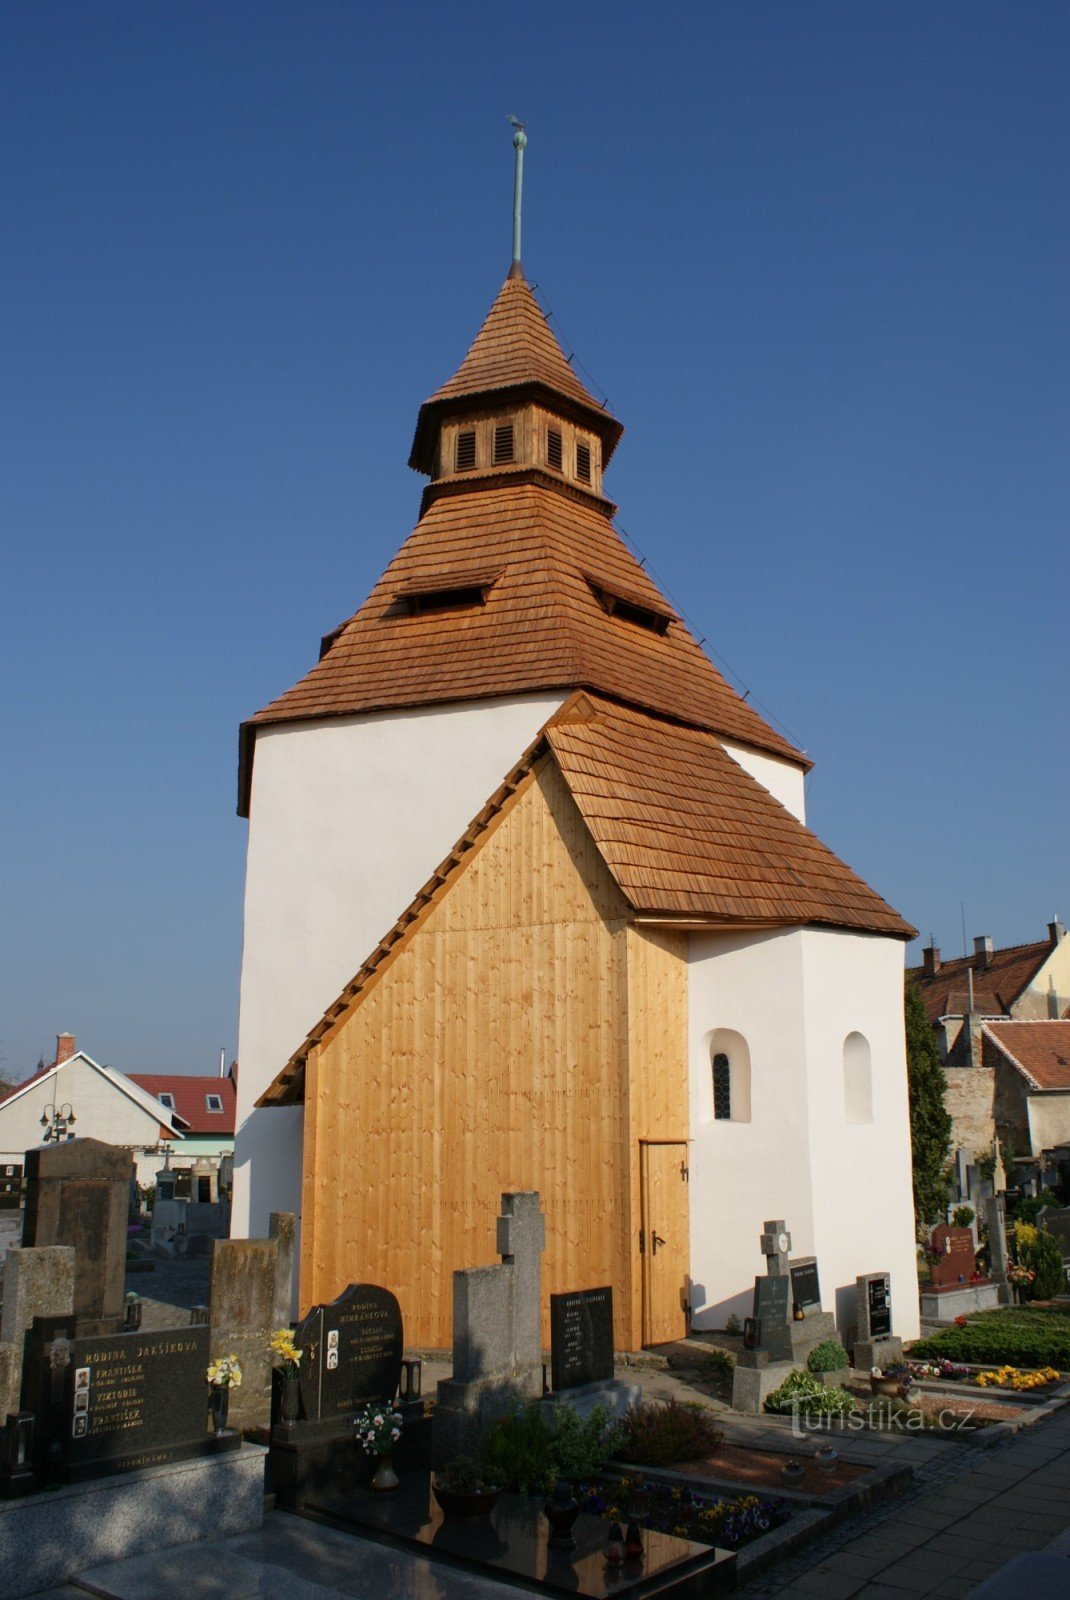 Staré Město bei Uh. Hradiště – Friedhofsgelände mit der Kirche St. Erzengel Michael